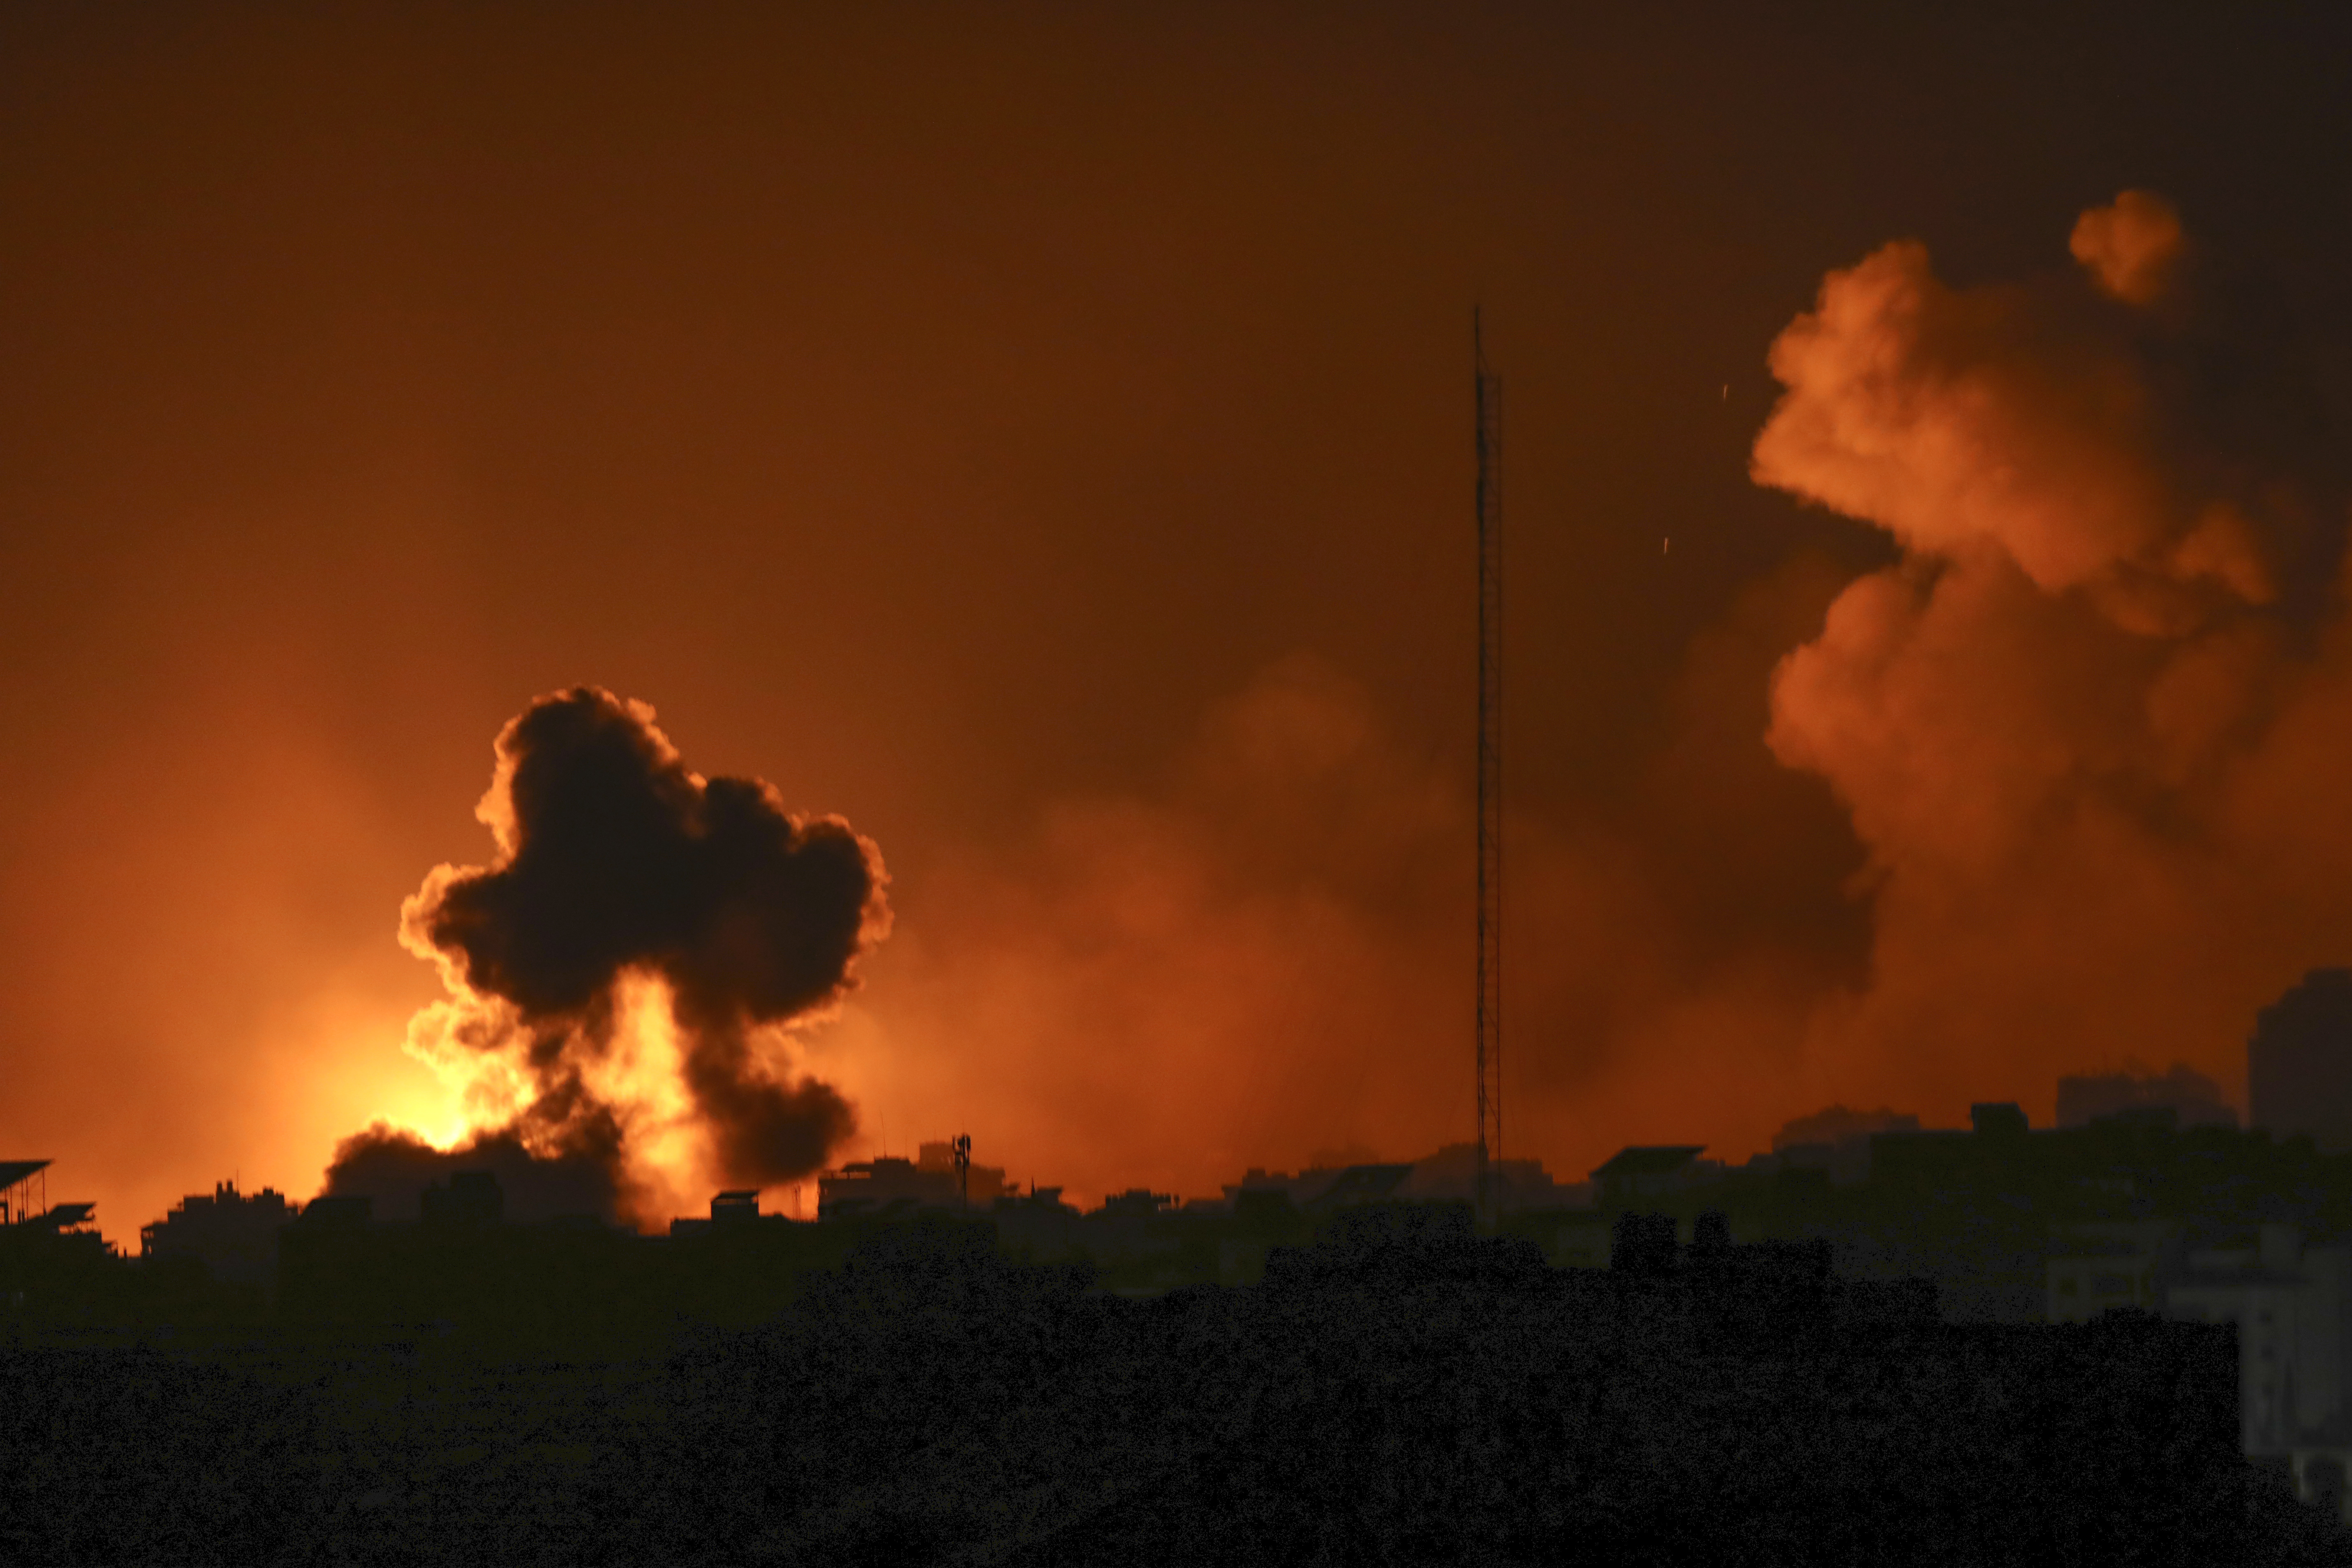 israel gaza war updates